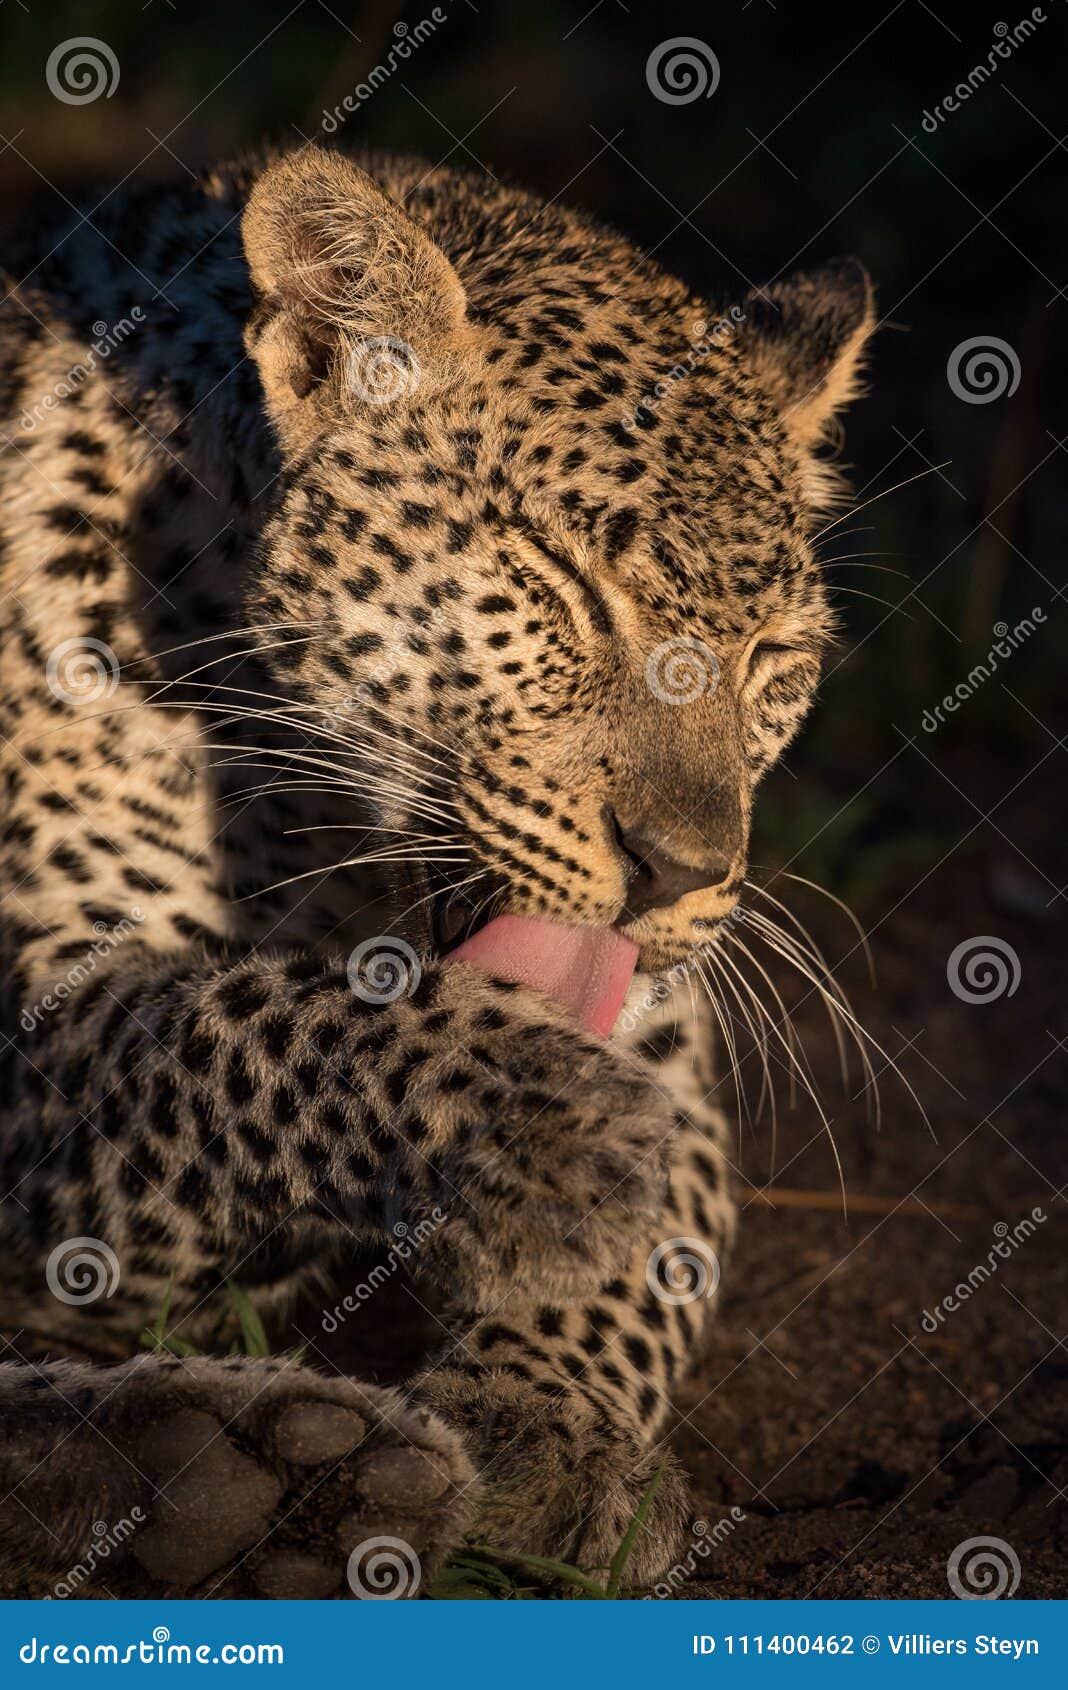 Leopard Lickin!